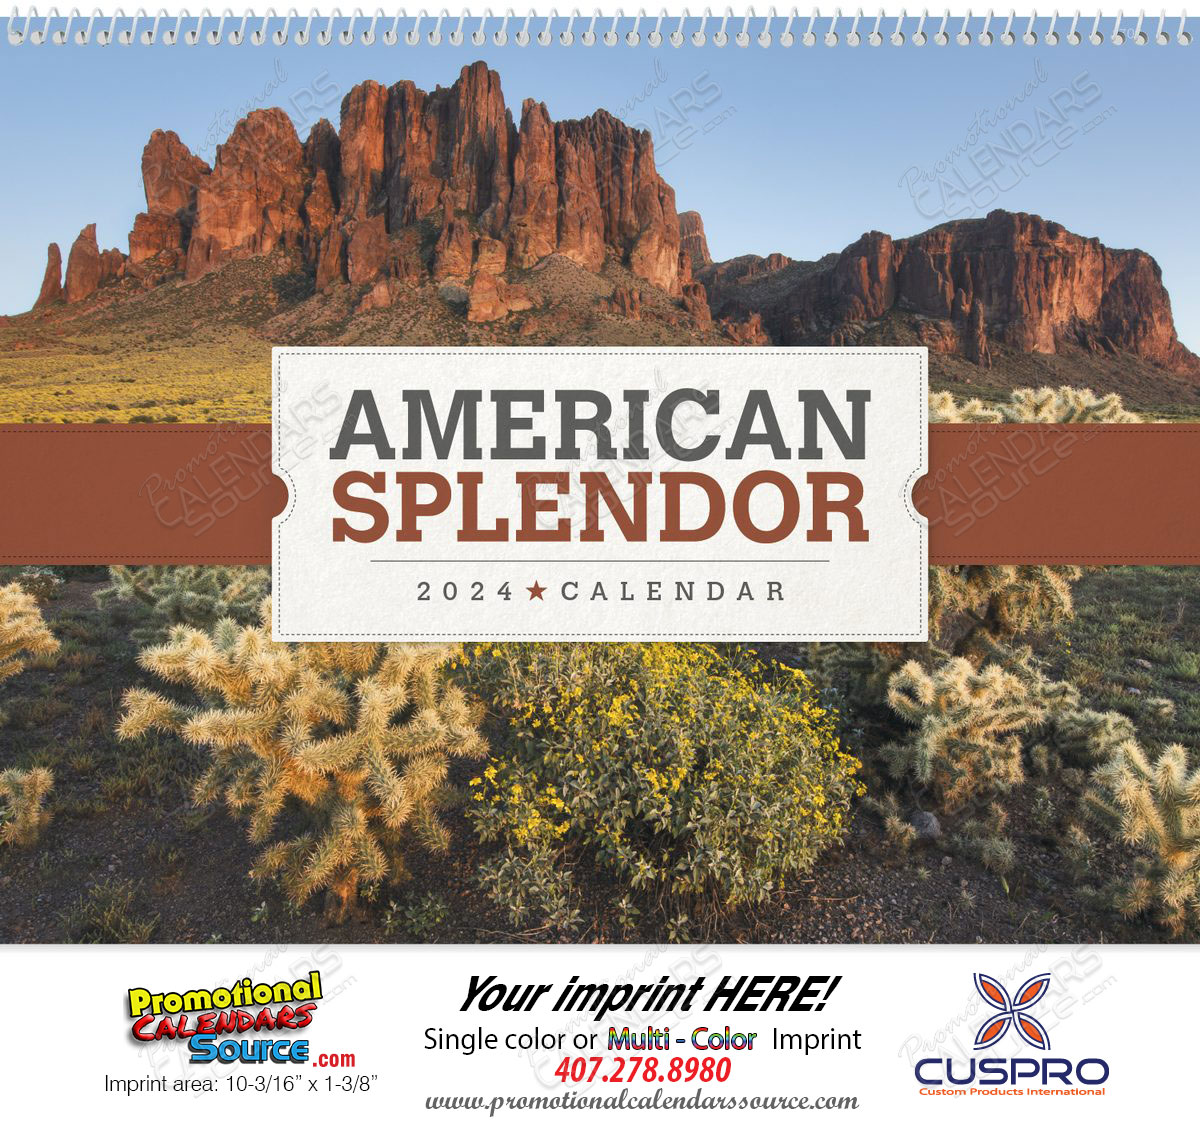 American Splendor Promotional Calendar 